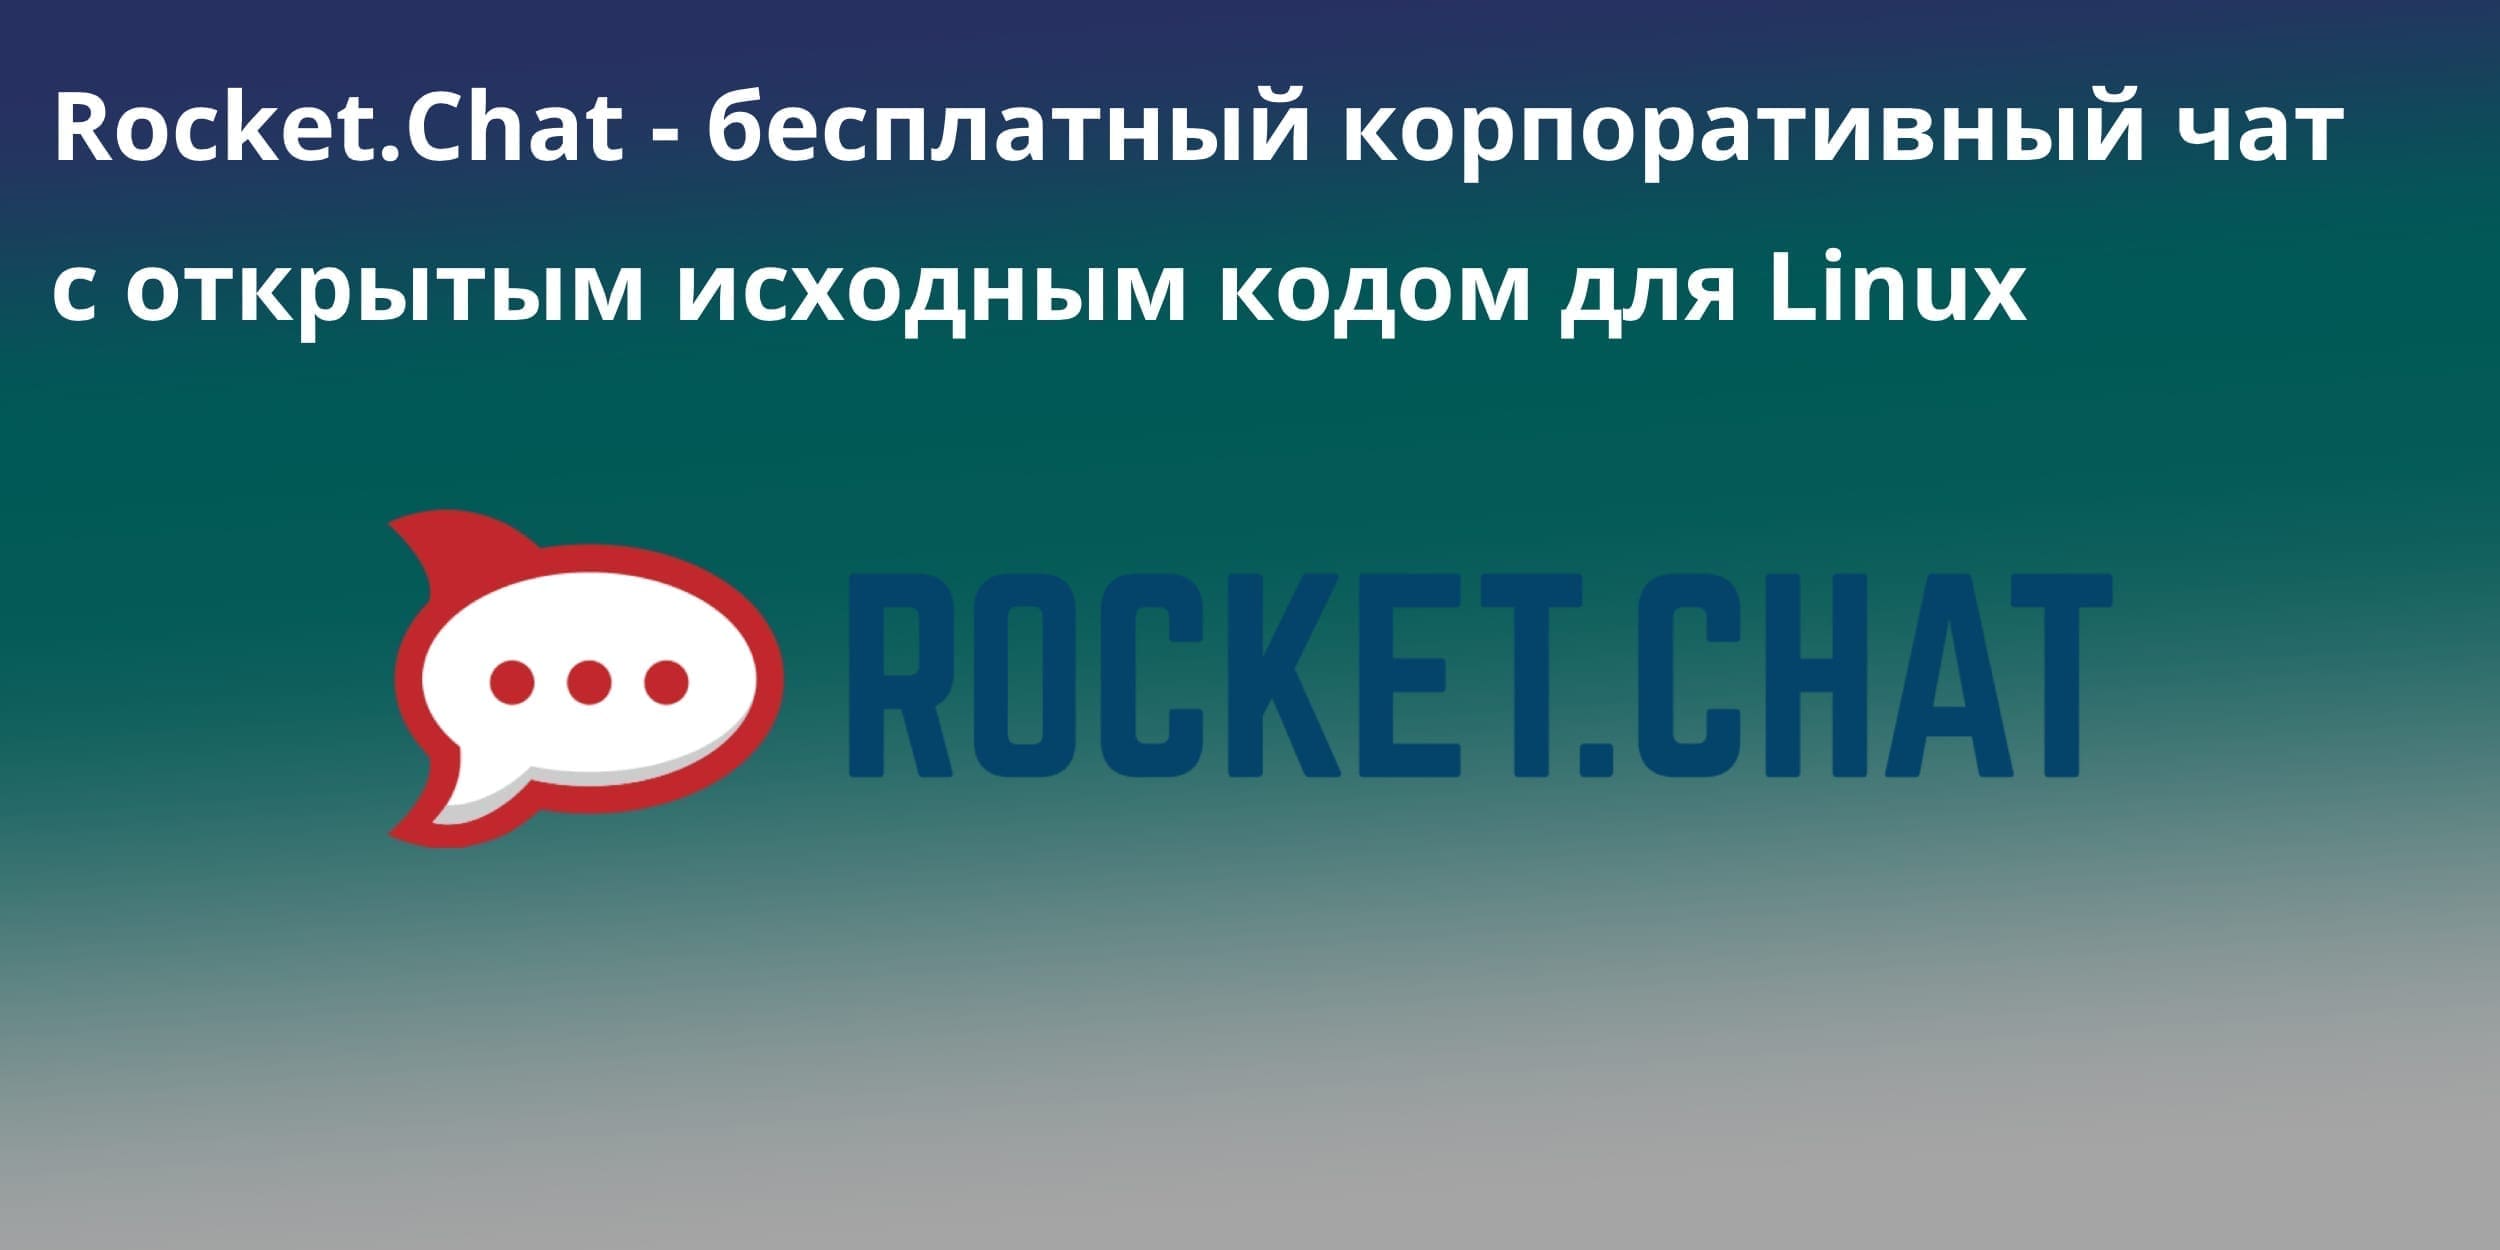 Change server name rocket chat